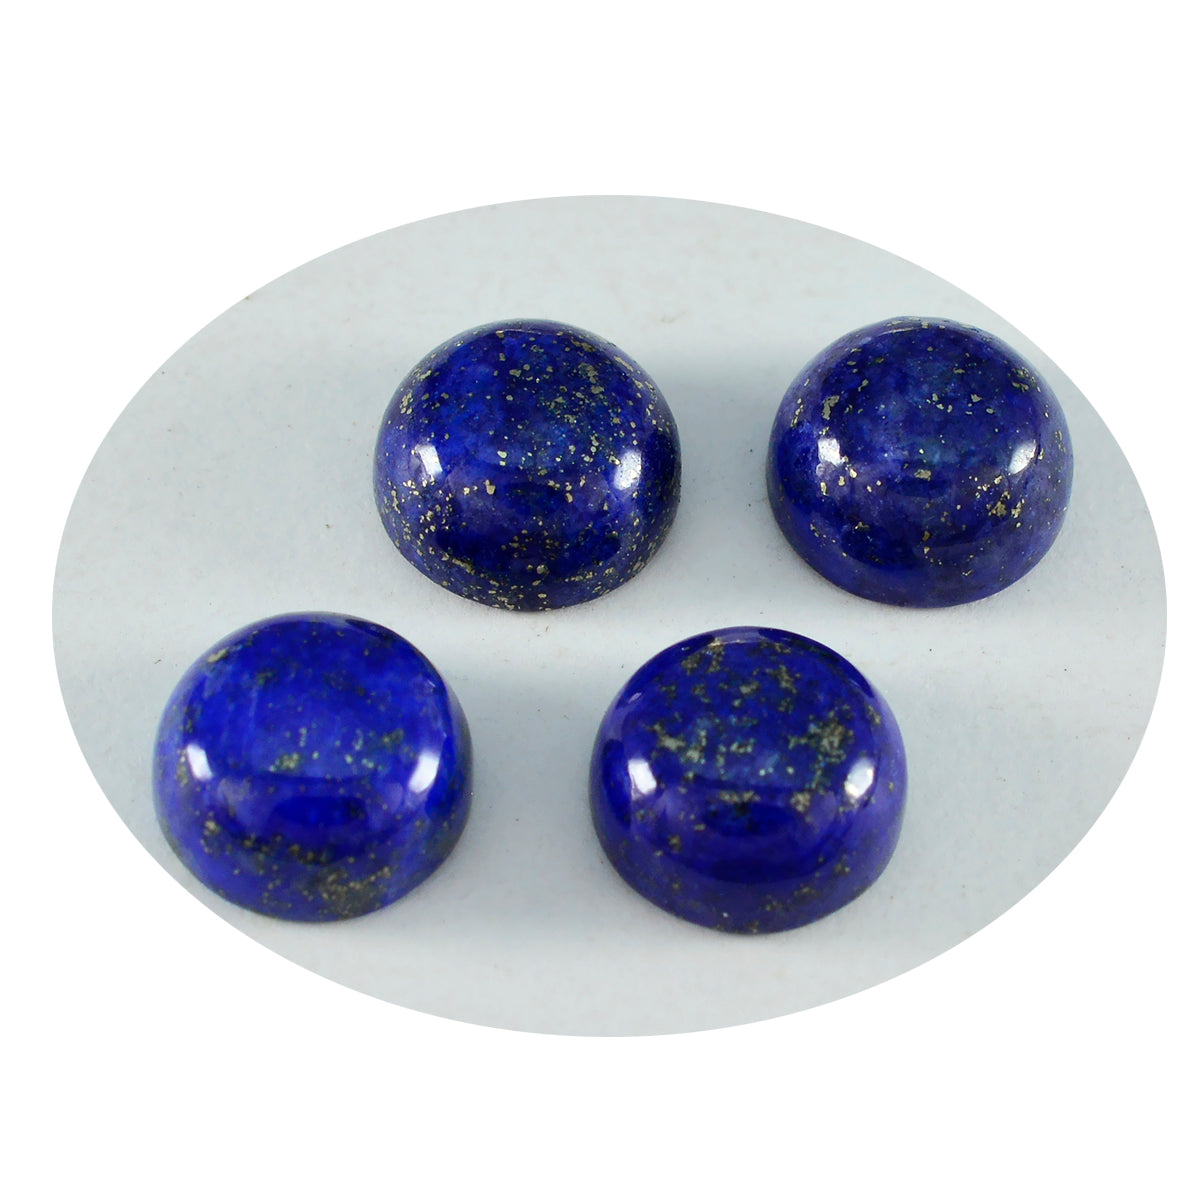 Riyogems 1PC Blue Lapis Lazuli Cabochon 8x8 mm Round Shape pretty Quality Loose Gemstone